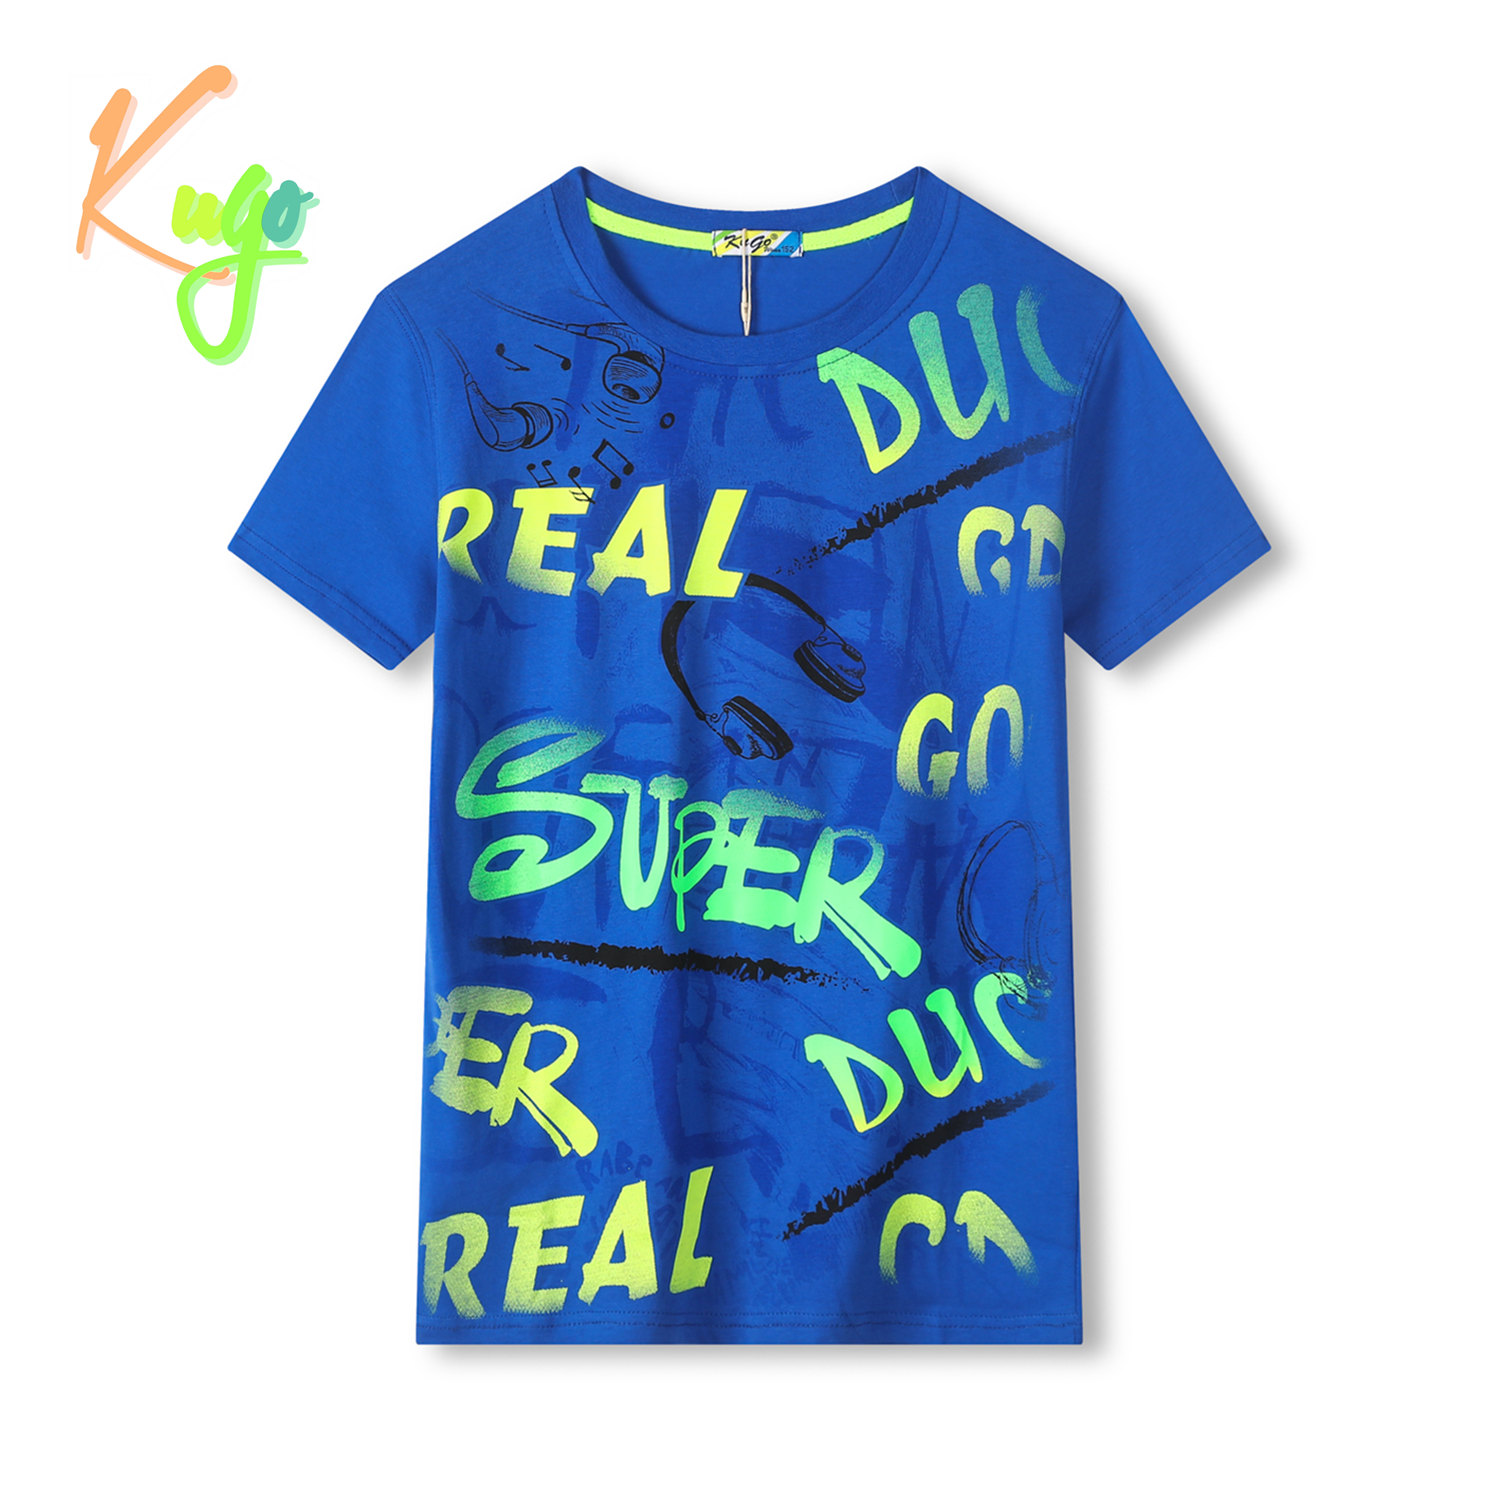 Chlapecké tričko - KUGO TM8576C, modrá Barva: Modrá, Velikost: 164